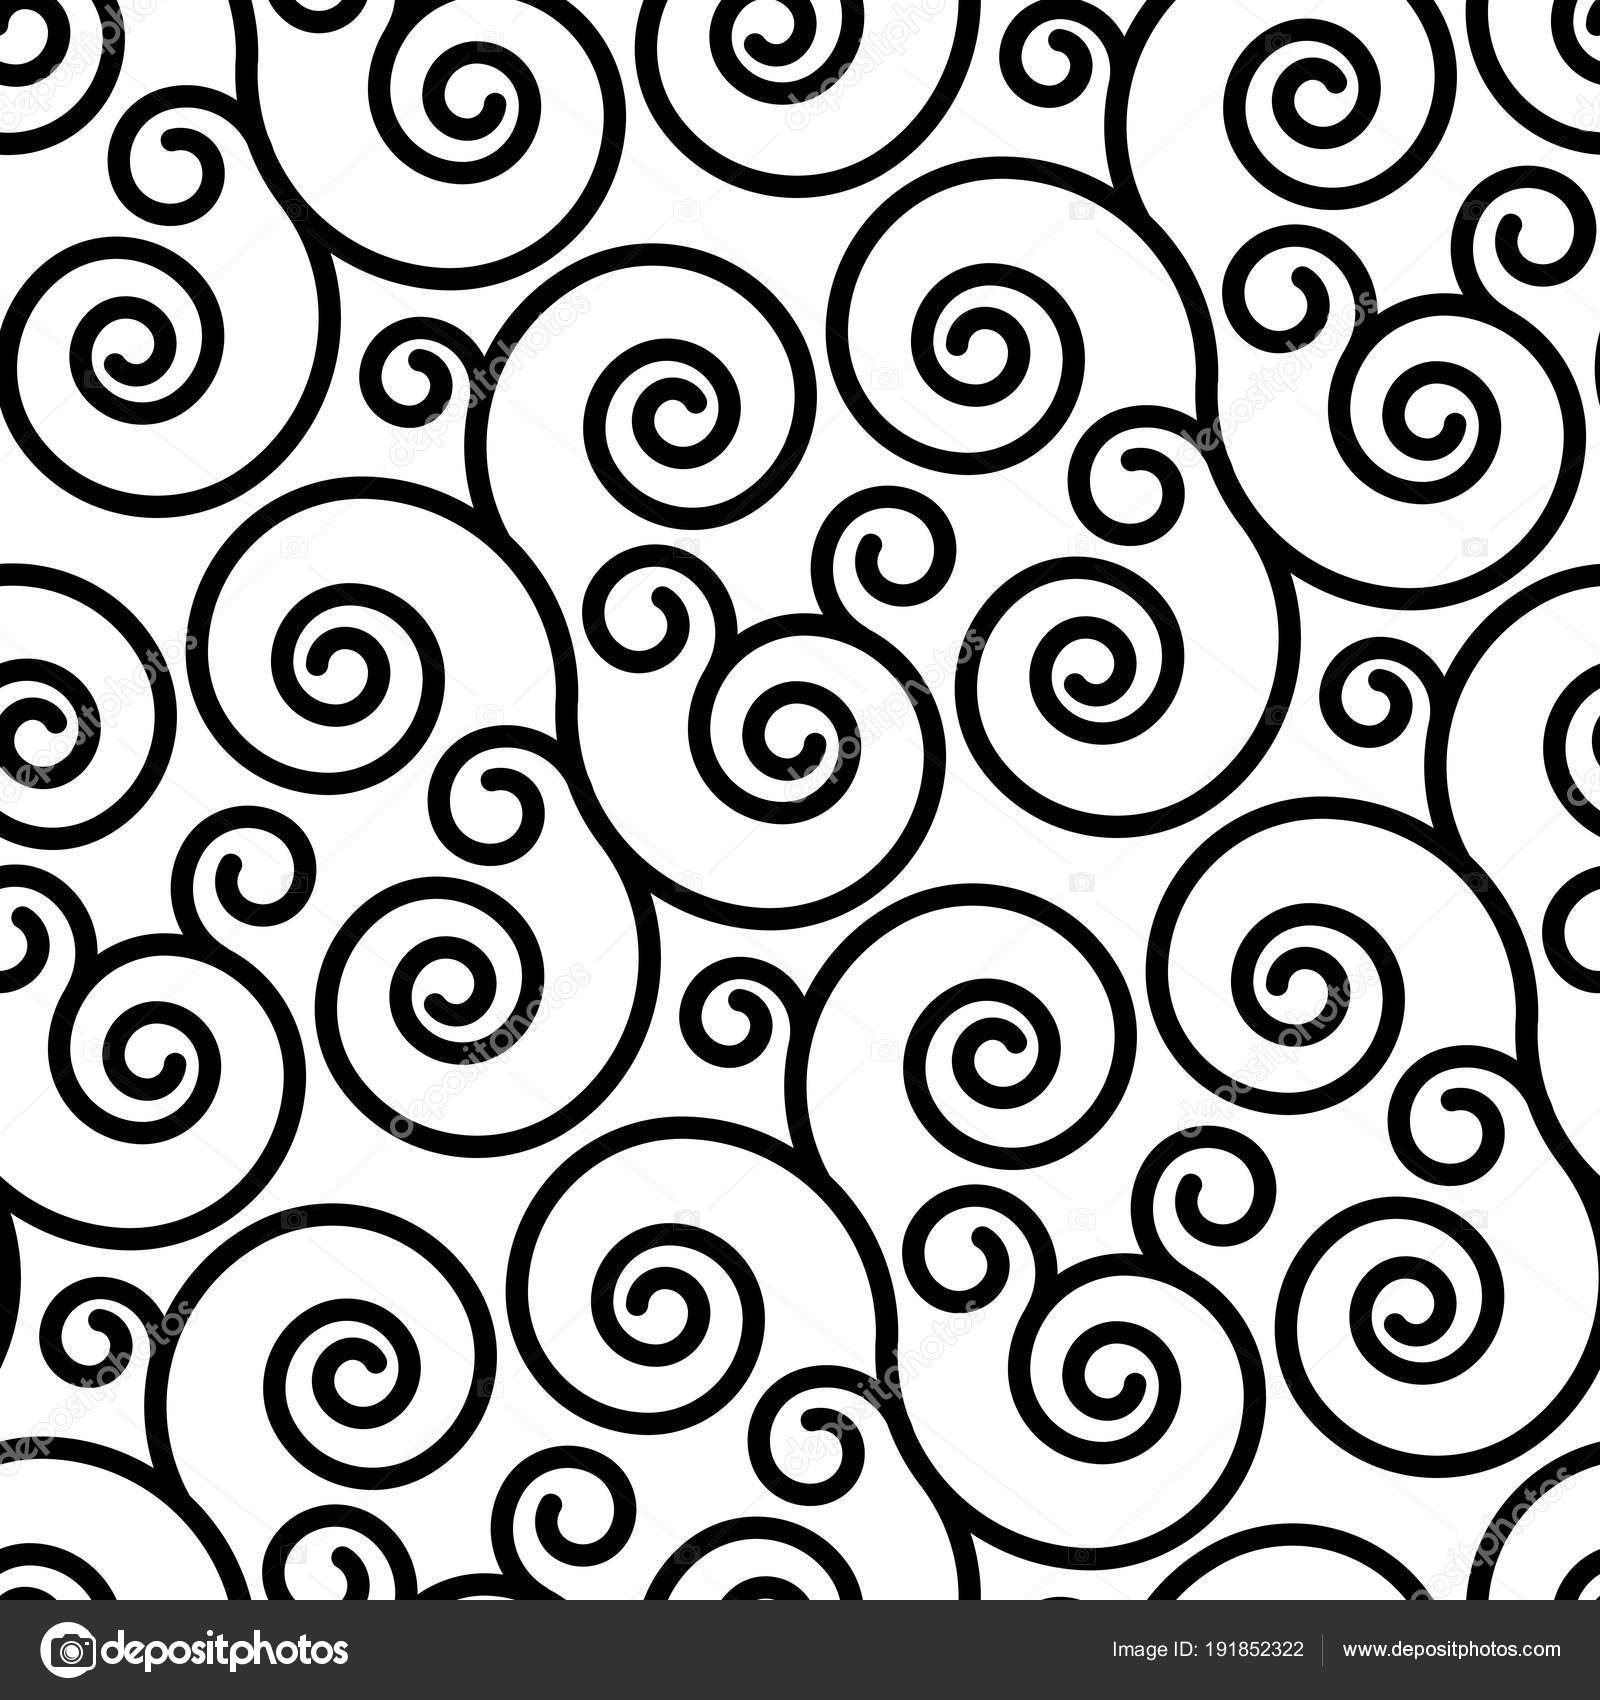 Elegant Seamless Pattern With Swirls On A White Background